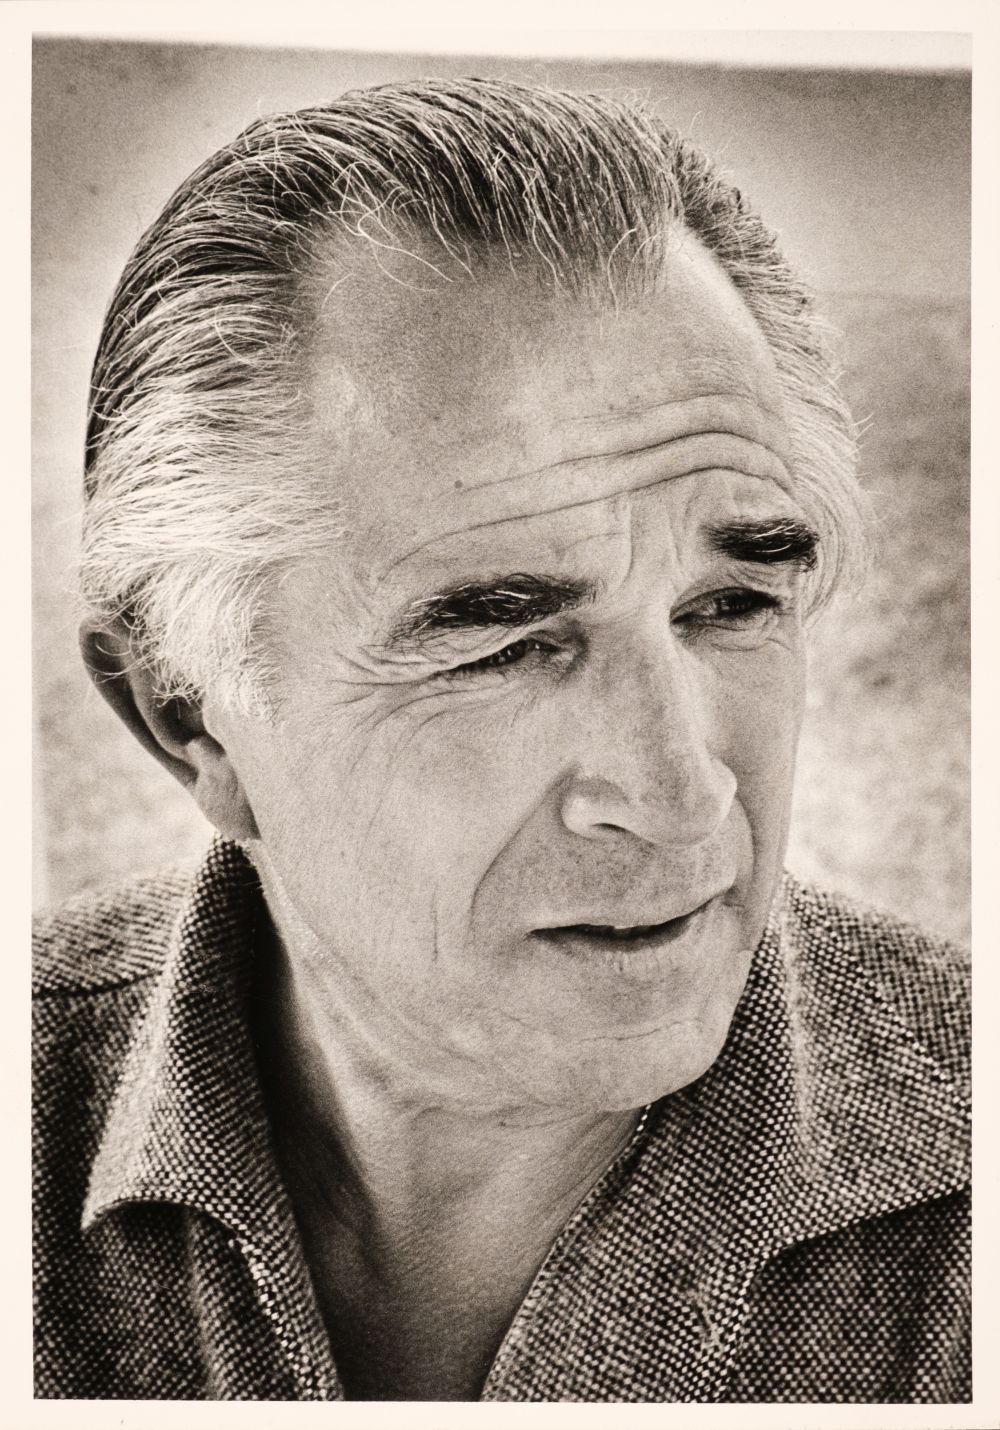 Duncan (David Douglas, 1916-2018). Headshot portrait of the American photojournalist